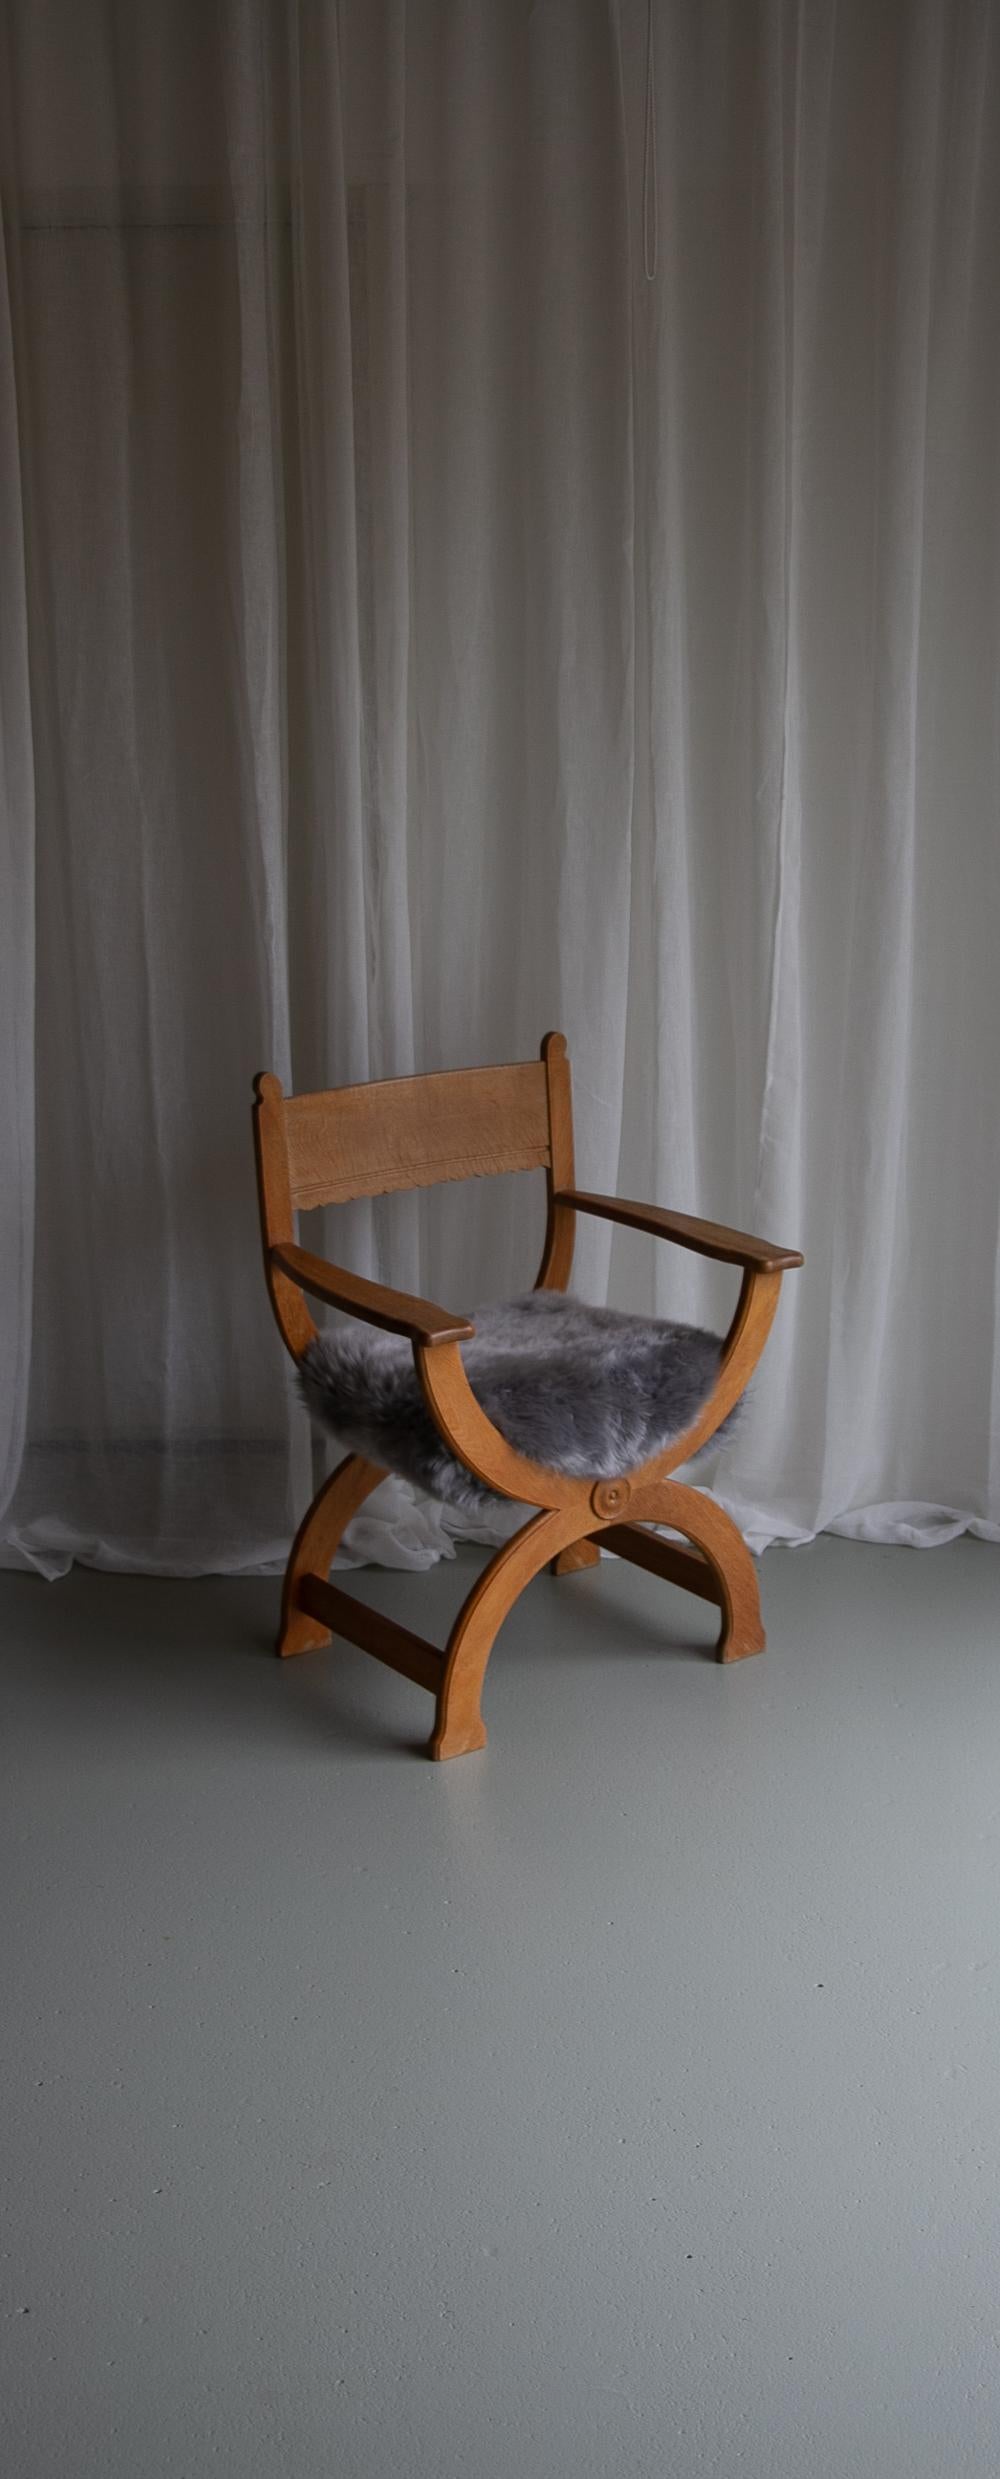 Vintage Danish Kurul Armchair in Oak by Henning Kjaernulf for EG Kvalitetsmøbel, Denmark, 1960s.

This Scandinavian Mid-Century Modern Curule chair in solid Nordic oak model 